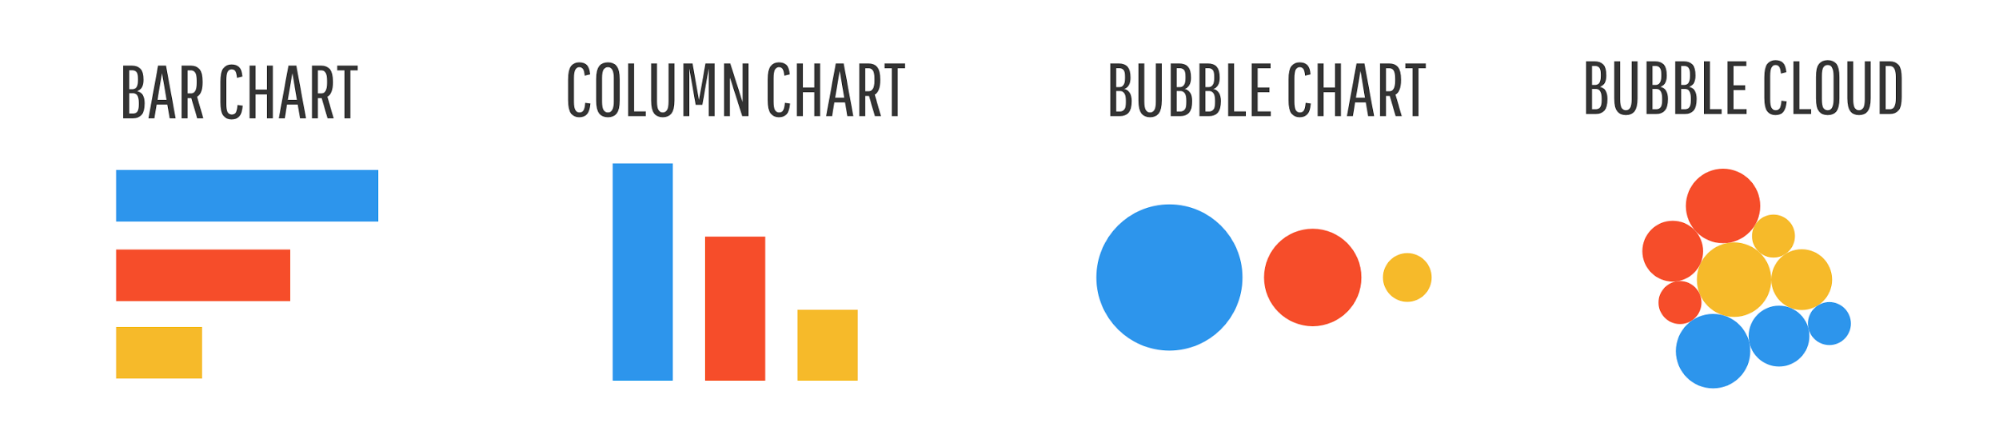 Bar chart, column chart, bubble chart, bubble cloud